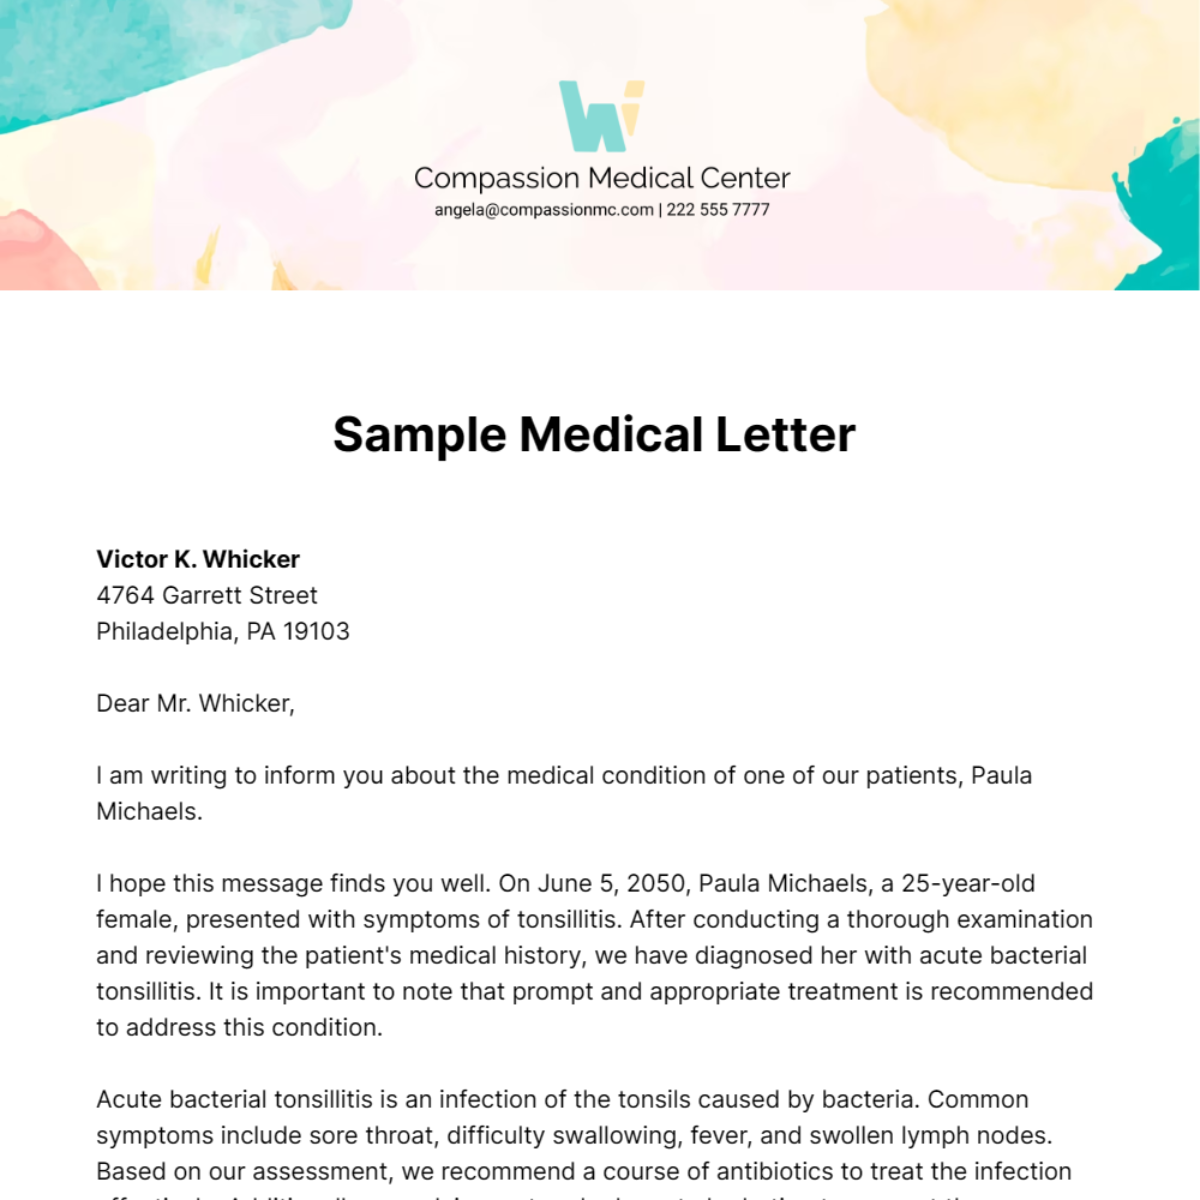 Sample Medical Letter Template